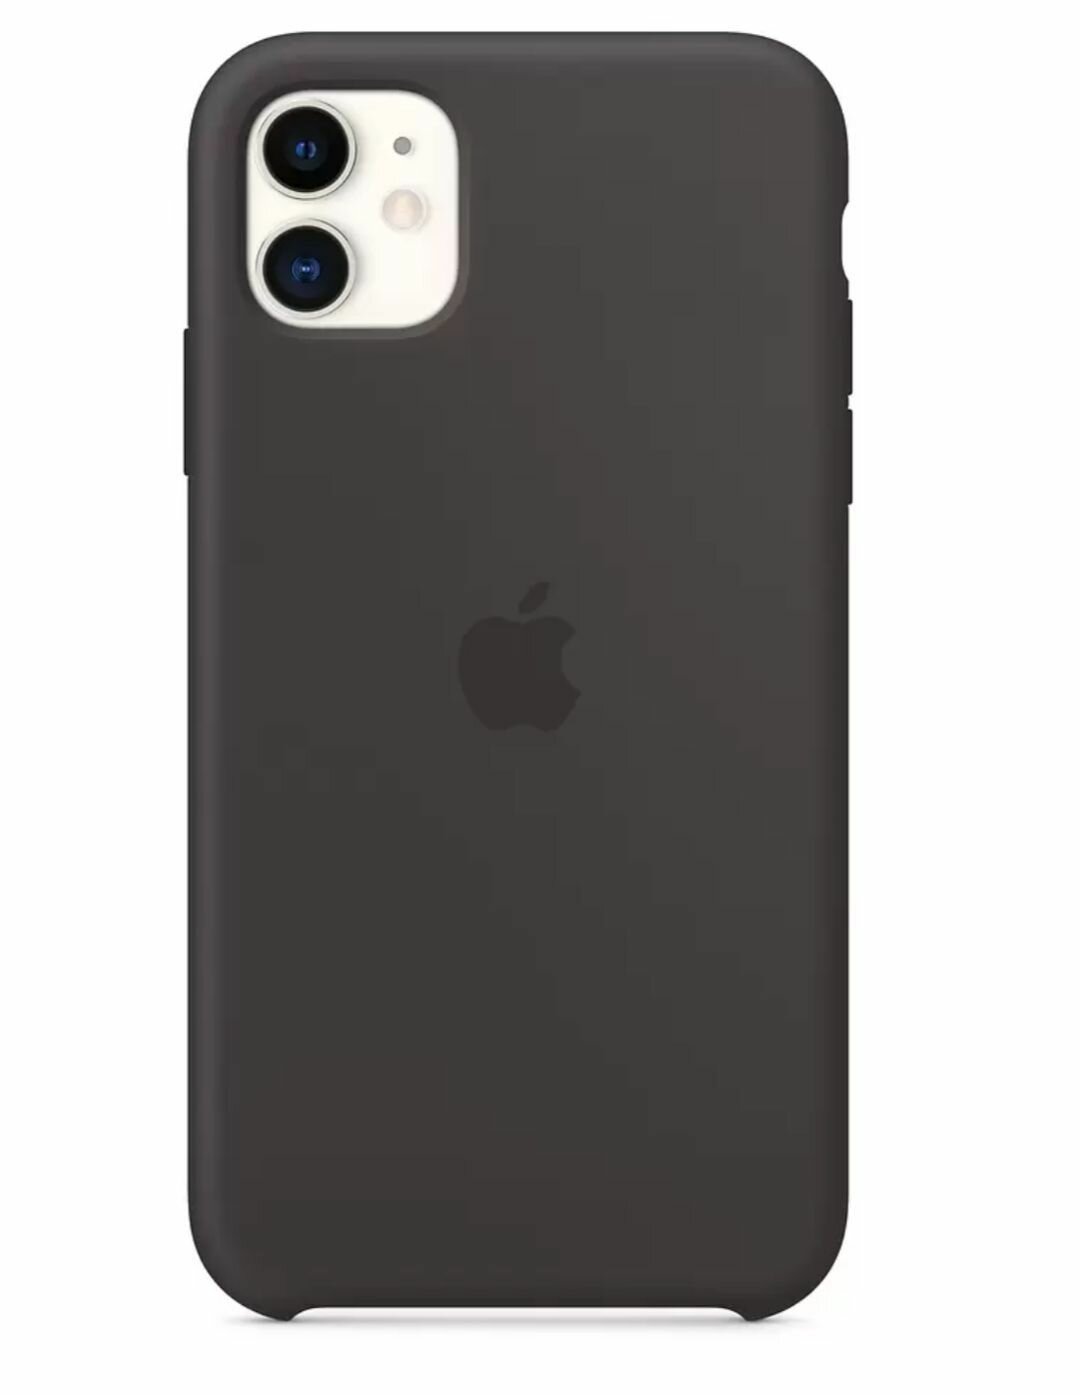 Apple iPhone 11 оригинальный чёрный чехол айфон 11